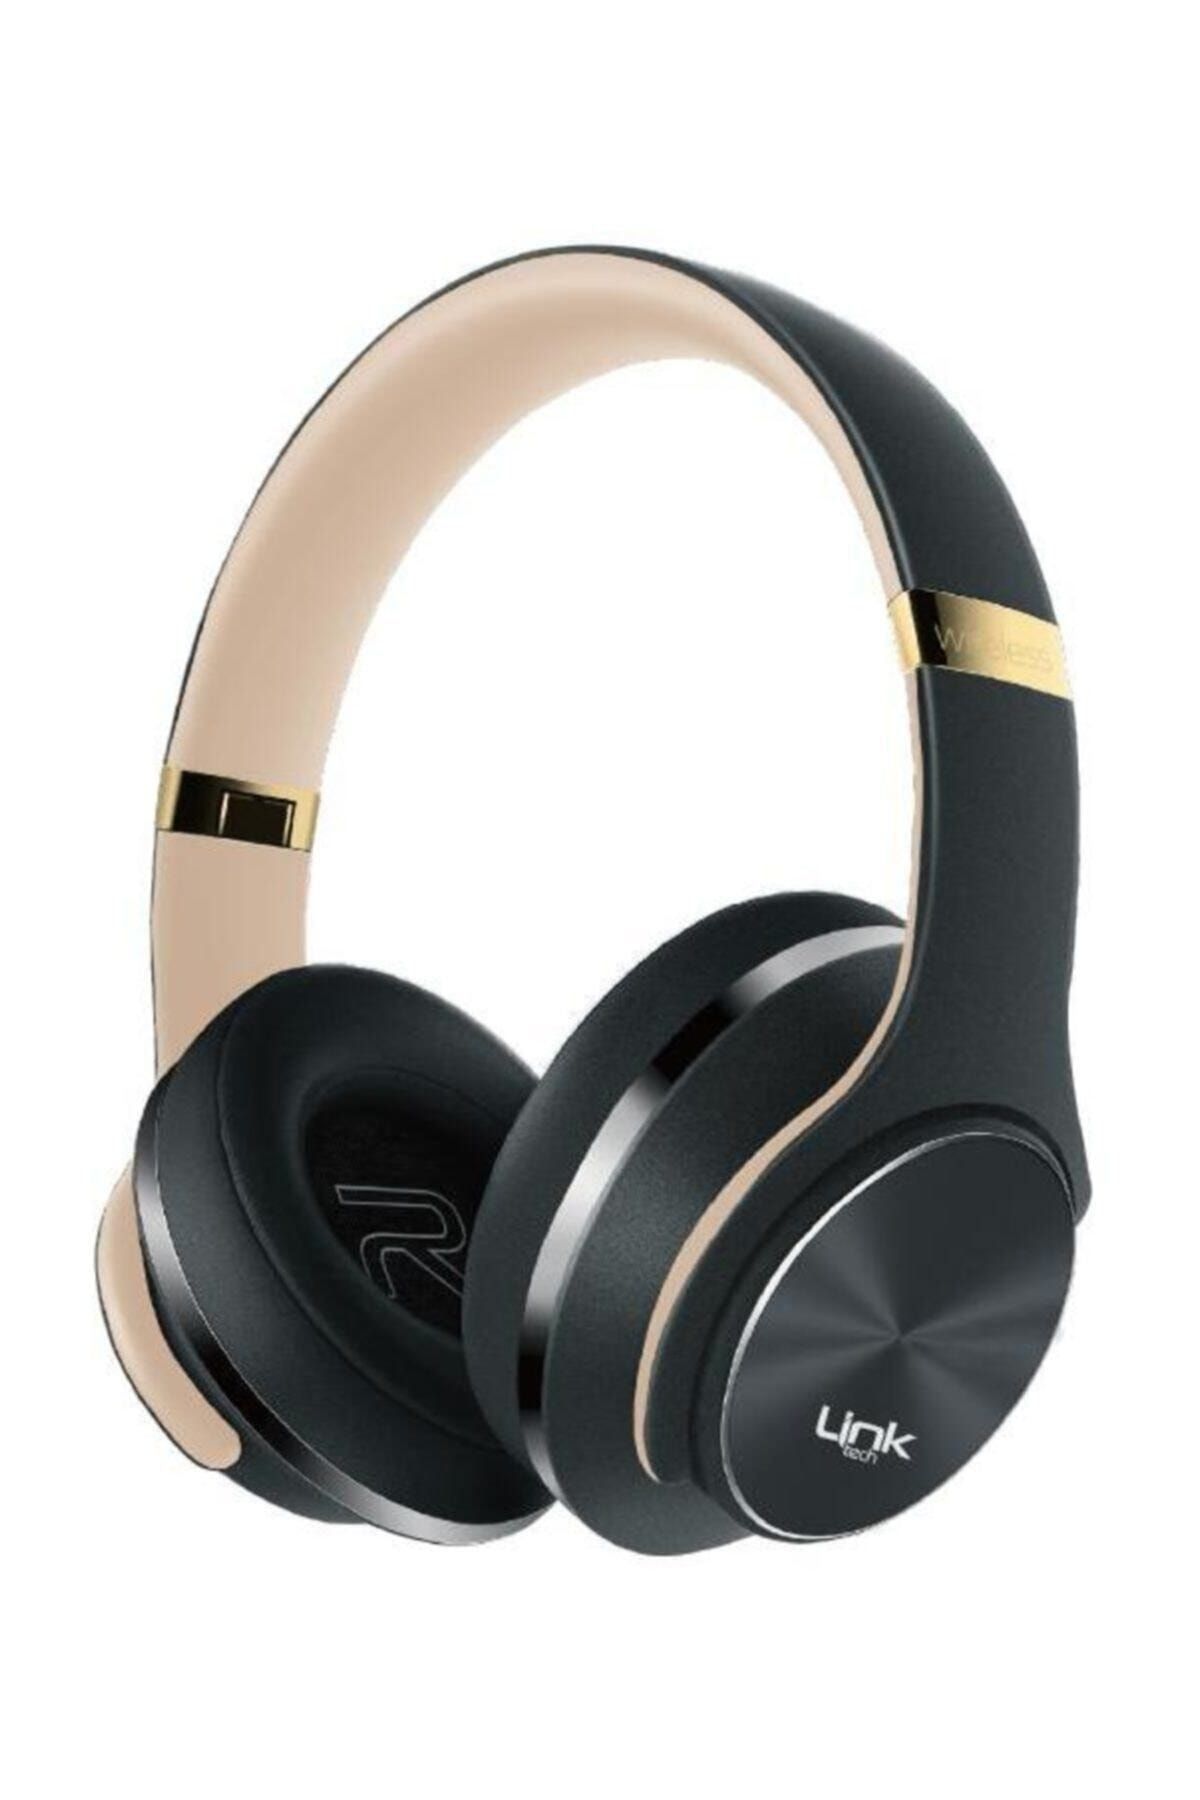 Linktech Hp6 Premium Kablosuz Kulak Üstü Kulaklık